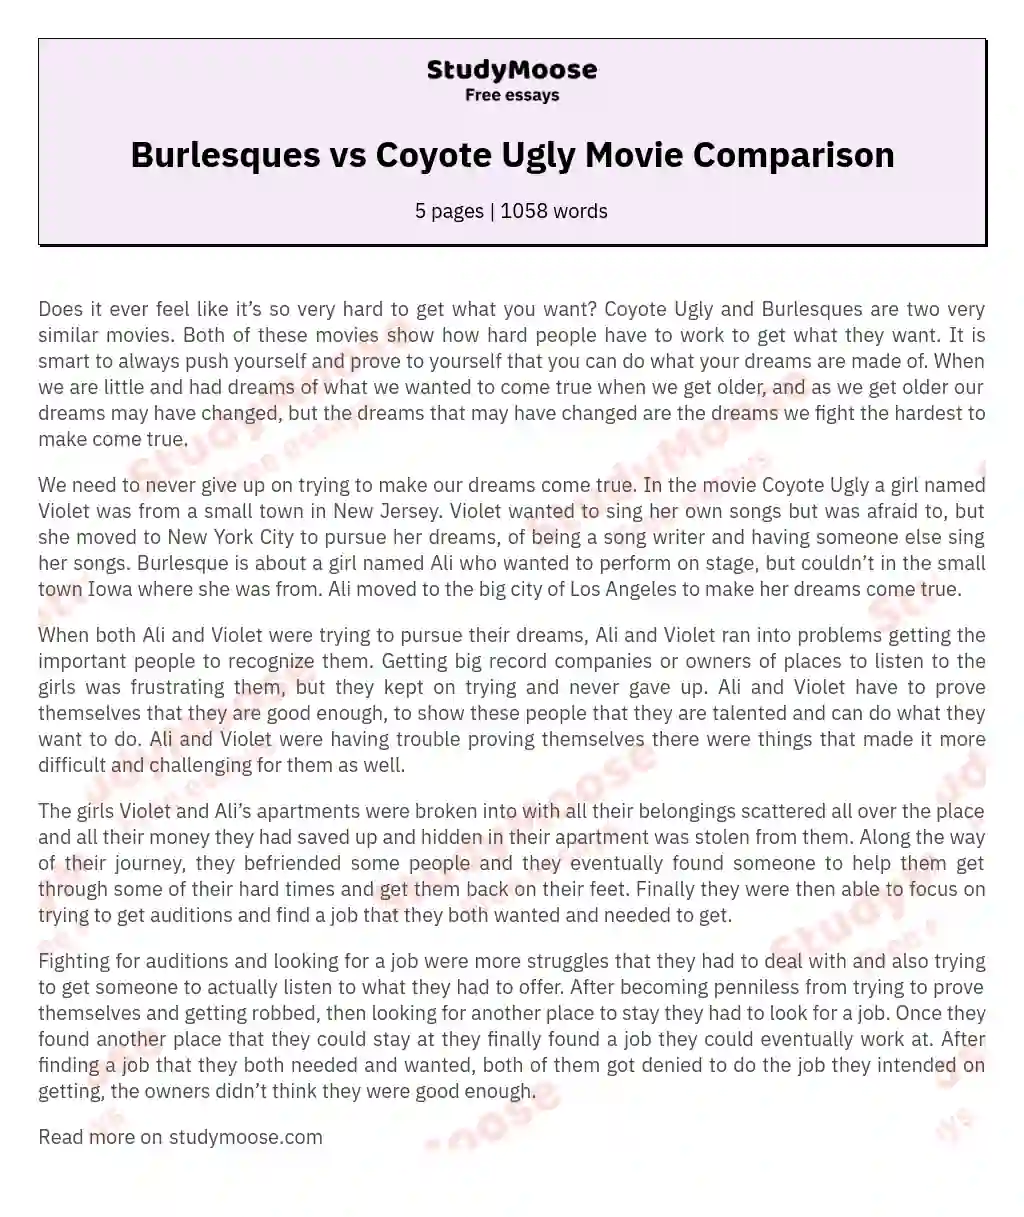 Burlesques vs Coyote Ugly Movie Comparison essay